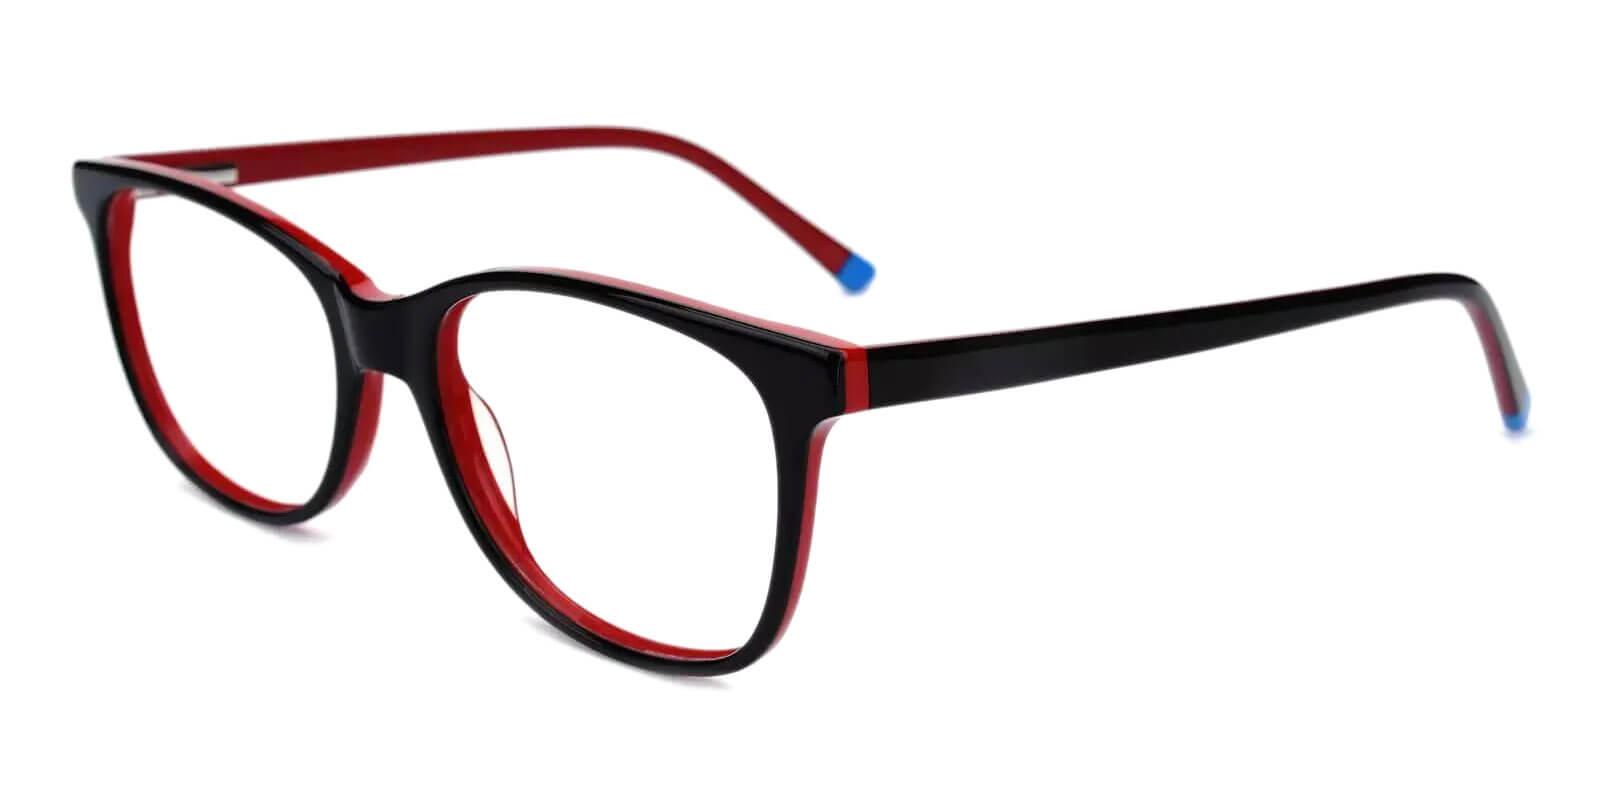 Hibbard Red Acetate Eyeglasses , SpringHinges , UniversalBridgeFit Frames from ABBE Glasses